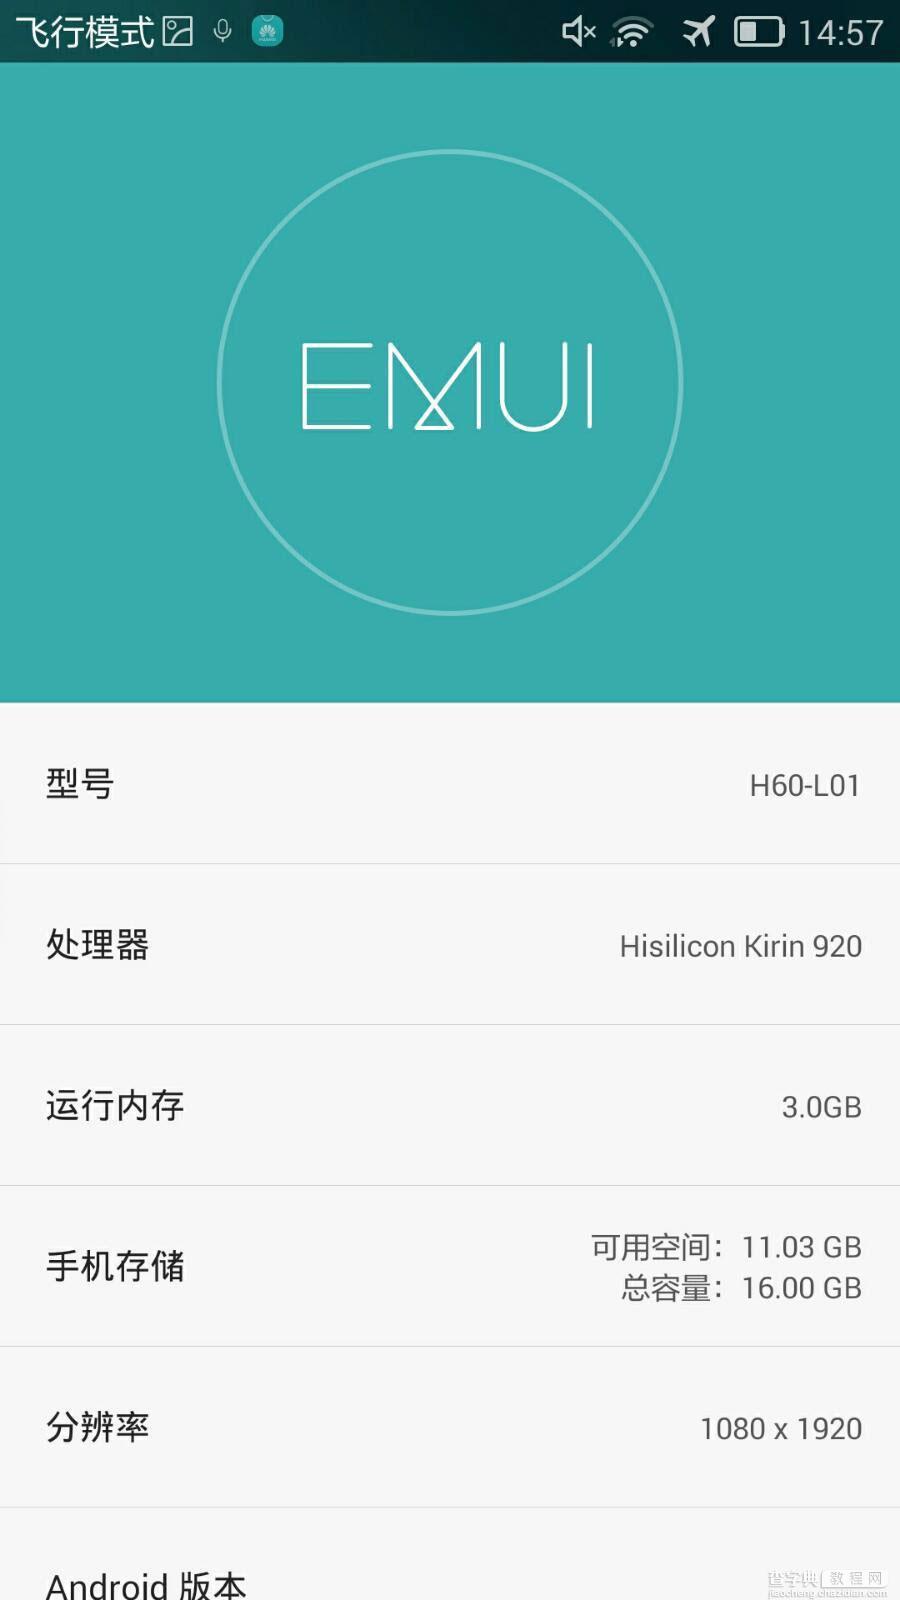 miui对比emui  华为EMUI 3.0界面全曝光8